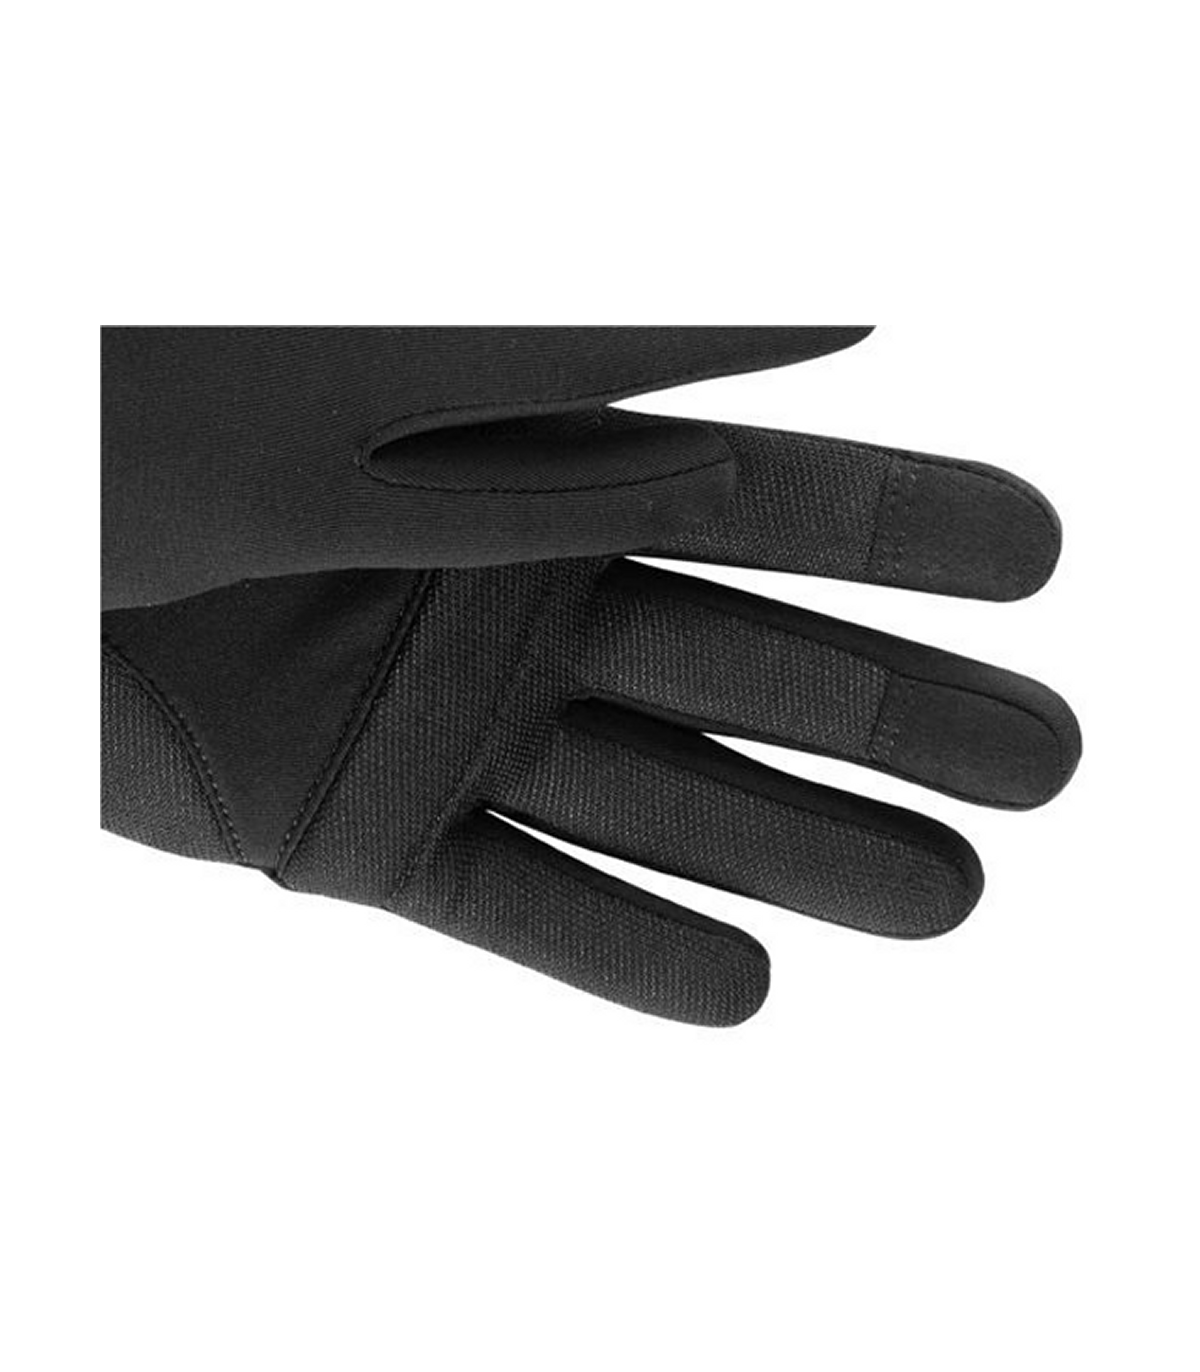 Rollerblade Skate Gear Gloves - Gants de protection - noir